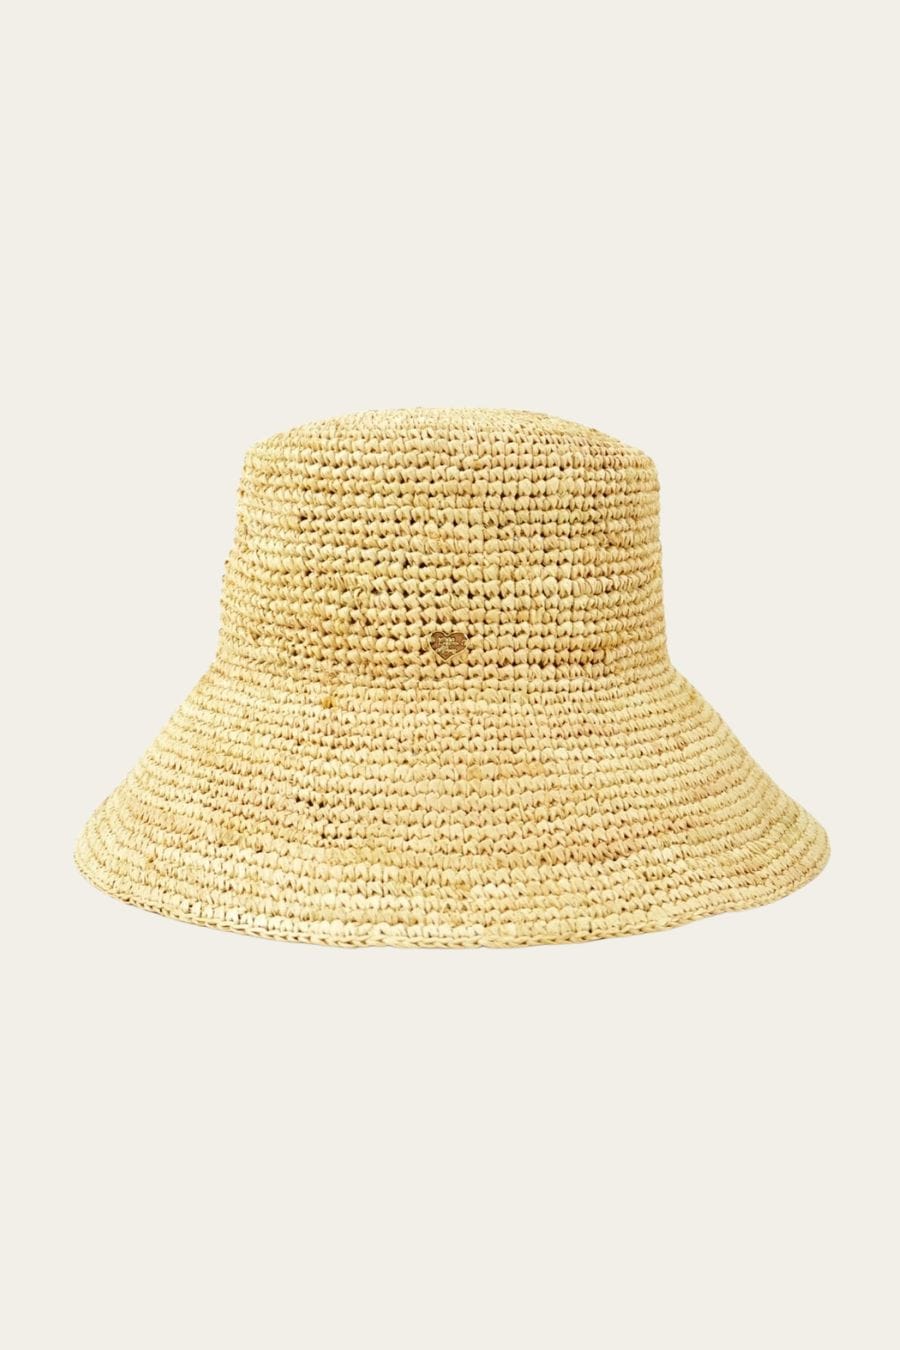 Chloe Alexis Accessories Natural The Bucket - Raffia Hat